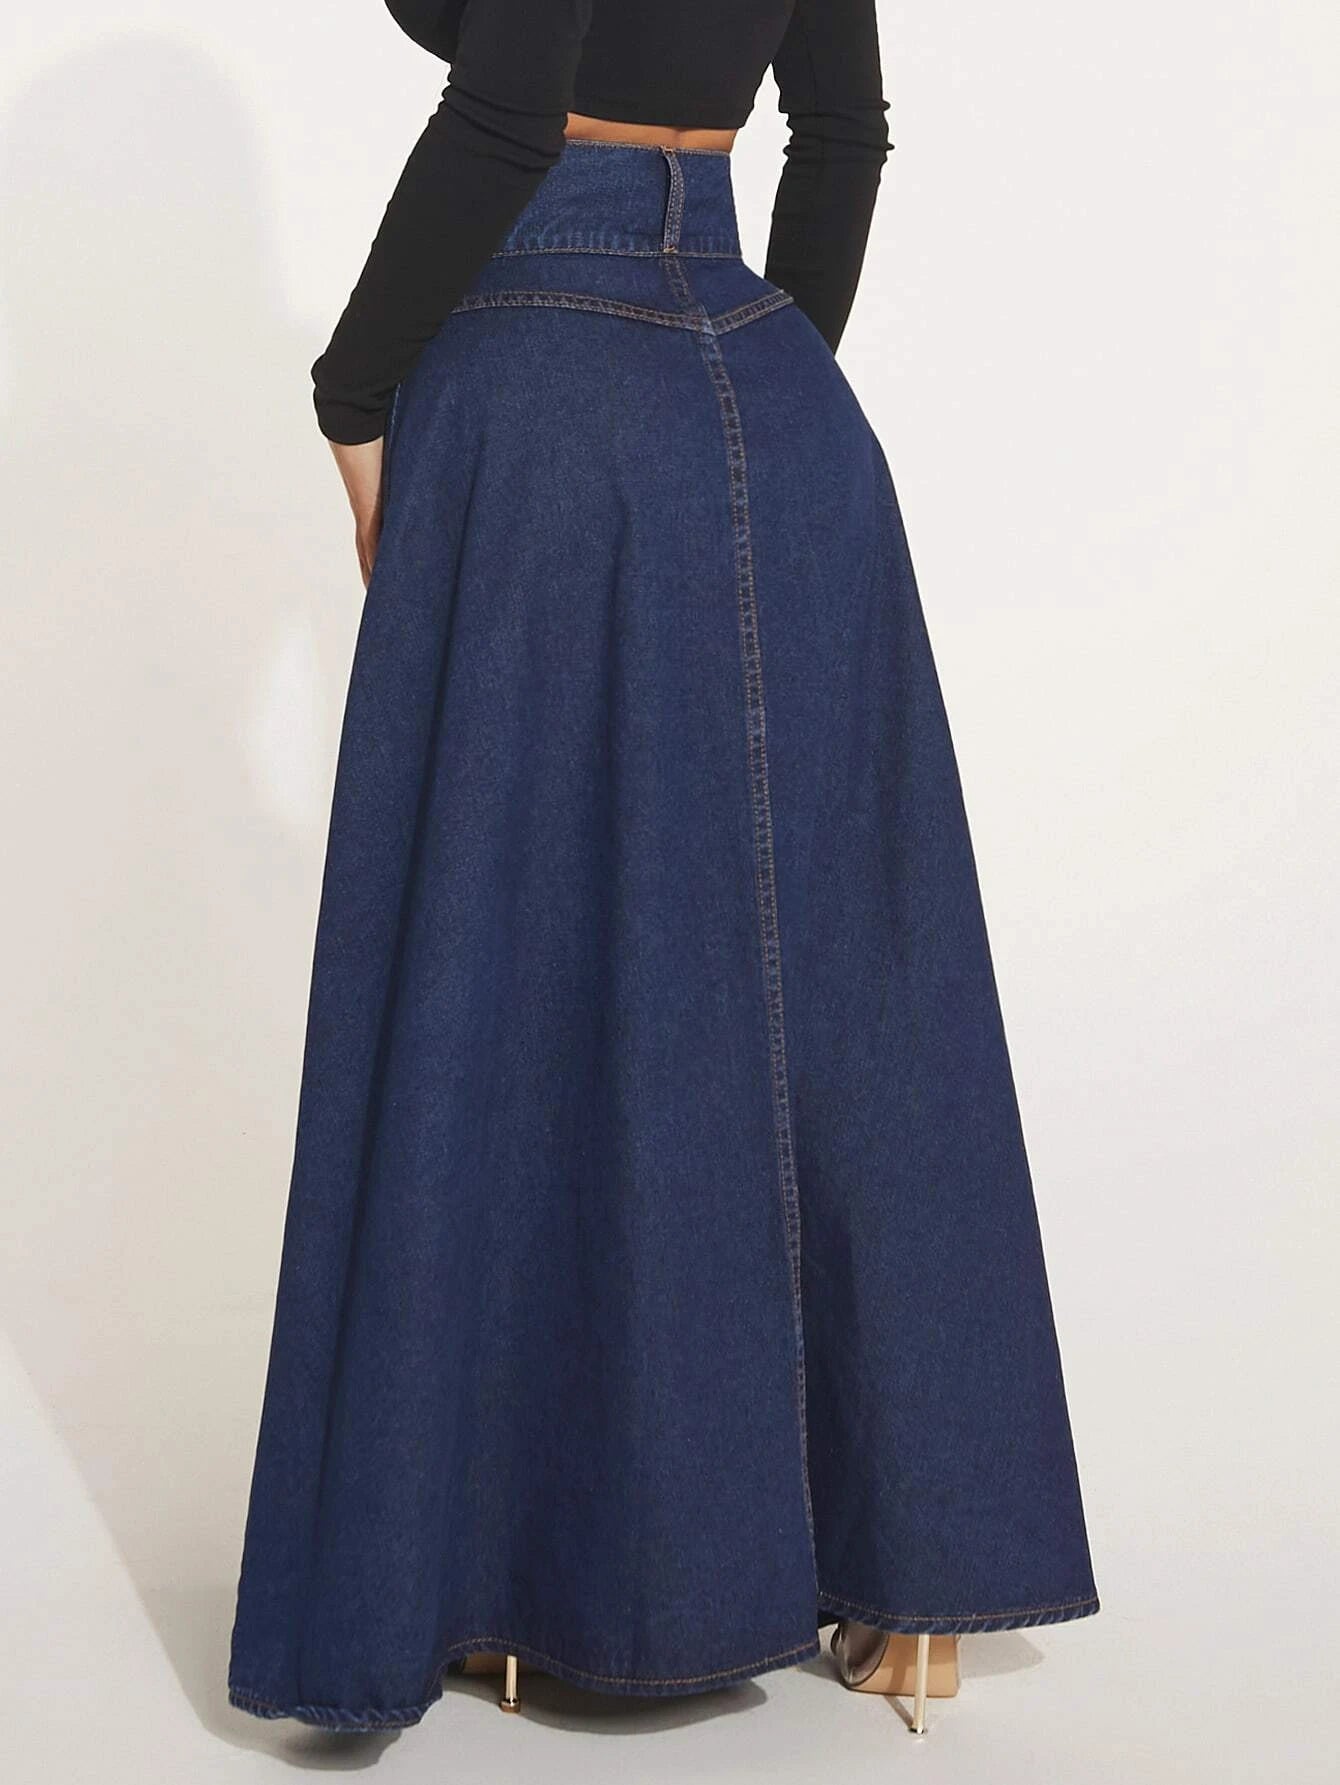 CM-BS809223 Women Preppy Seoul Style High Waist Button Front Flare Hem Denim Skirt